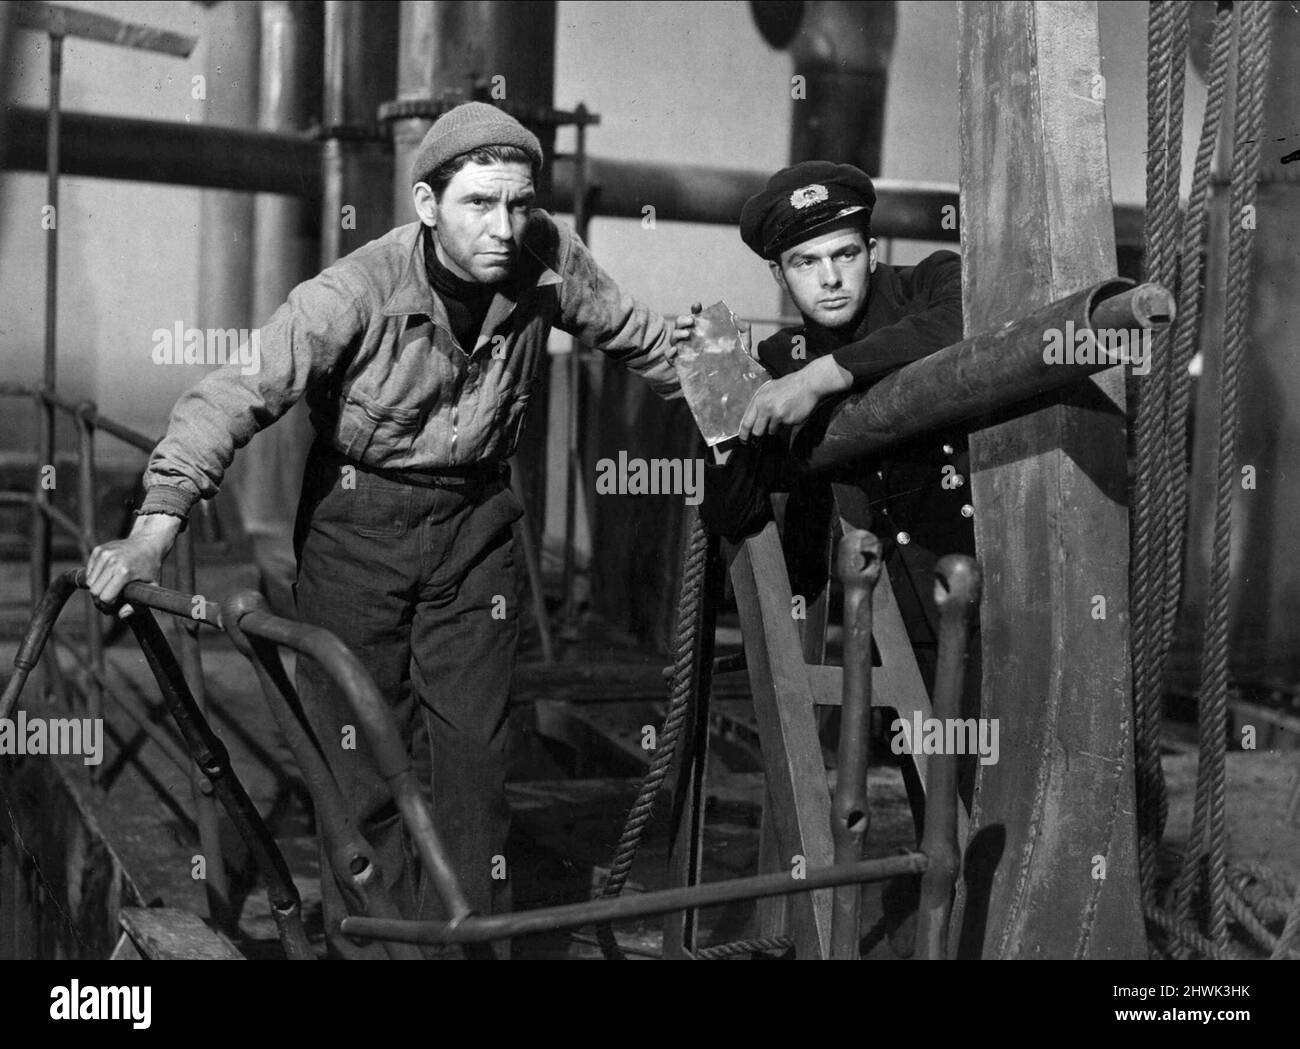 ROBERT BEATTY, SAN DEMETRIO LONDON, 1943 Stock Photo - Alamy